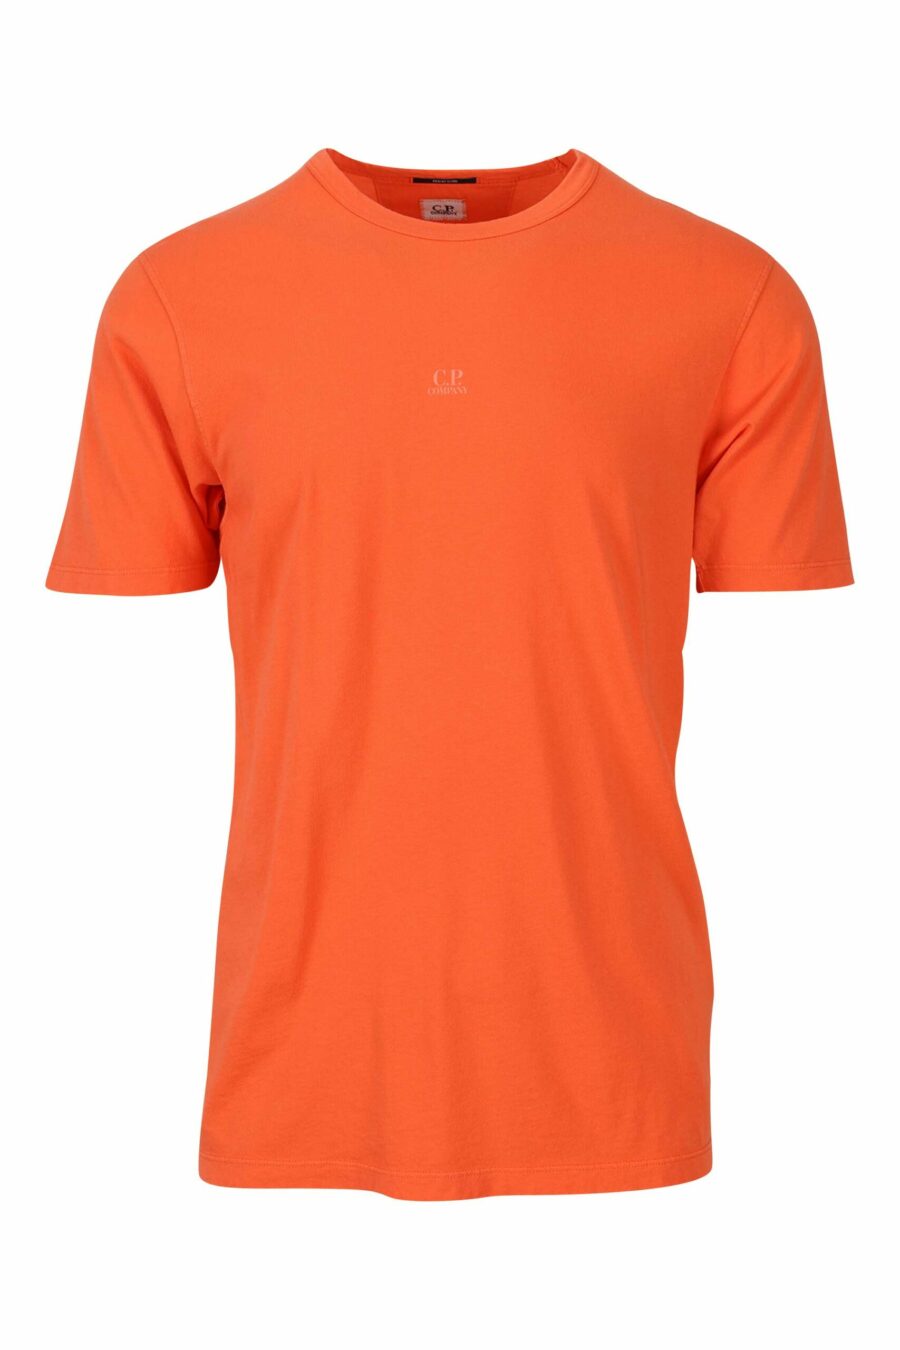 Camiseta naranja con minilogo centrado - 7620943594928 1 scaled